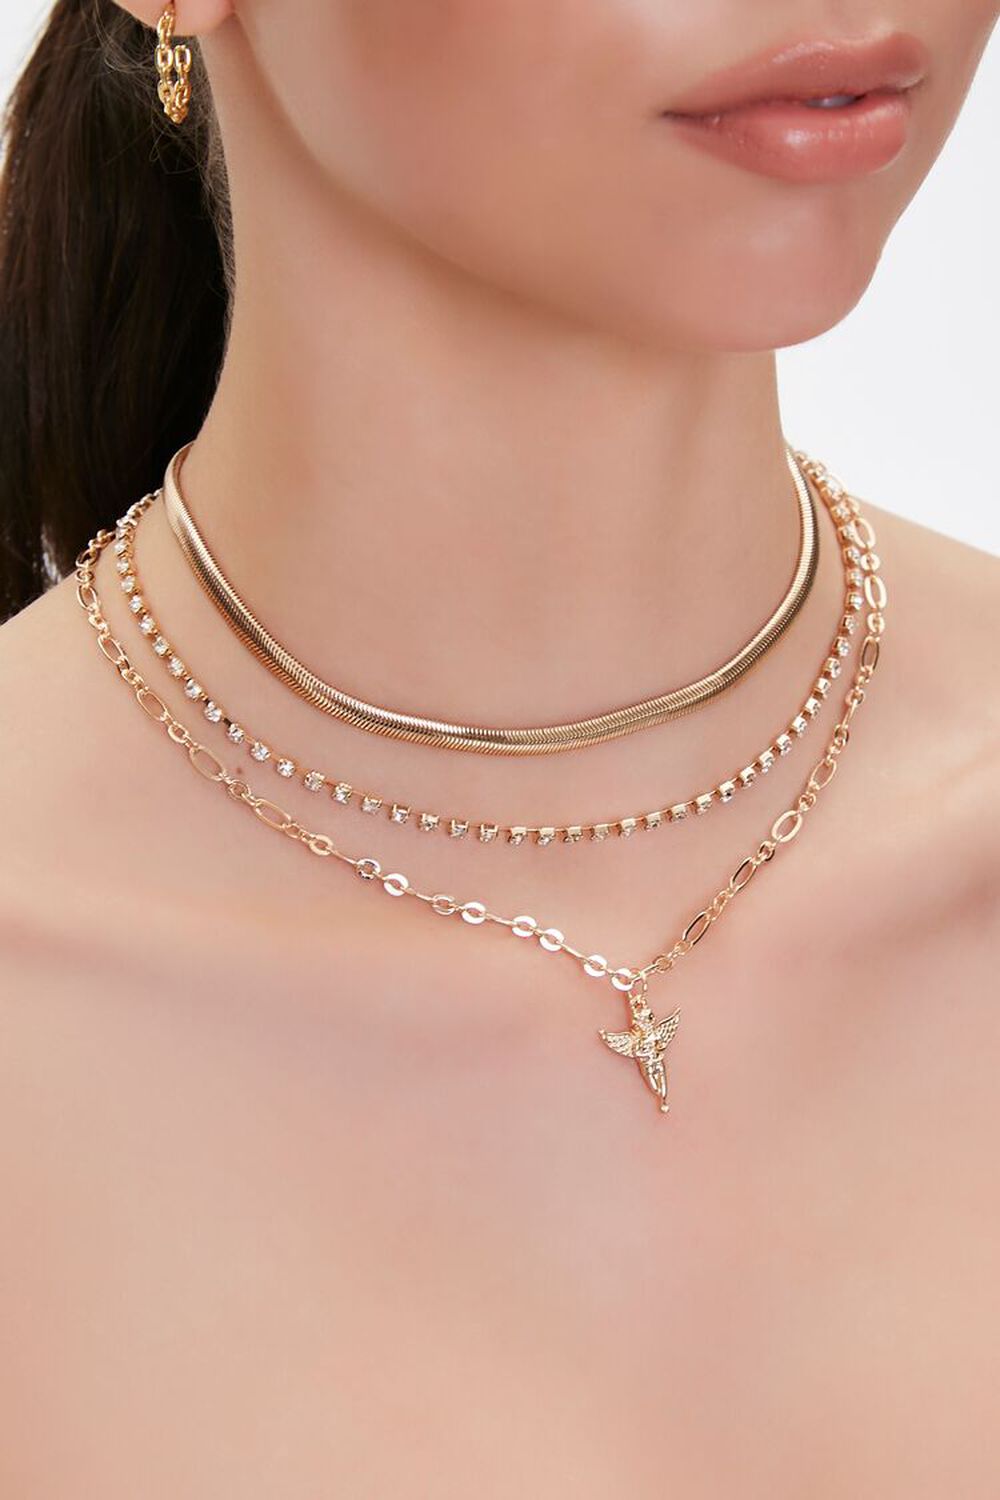 GOLD Cherub Pendant Layered Necklace, image 1